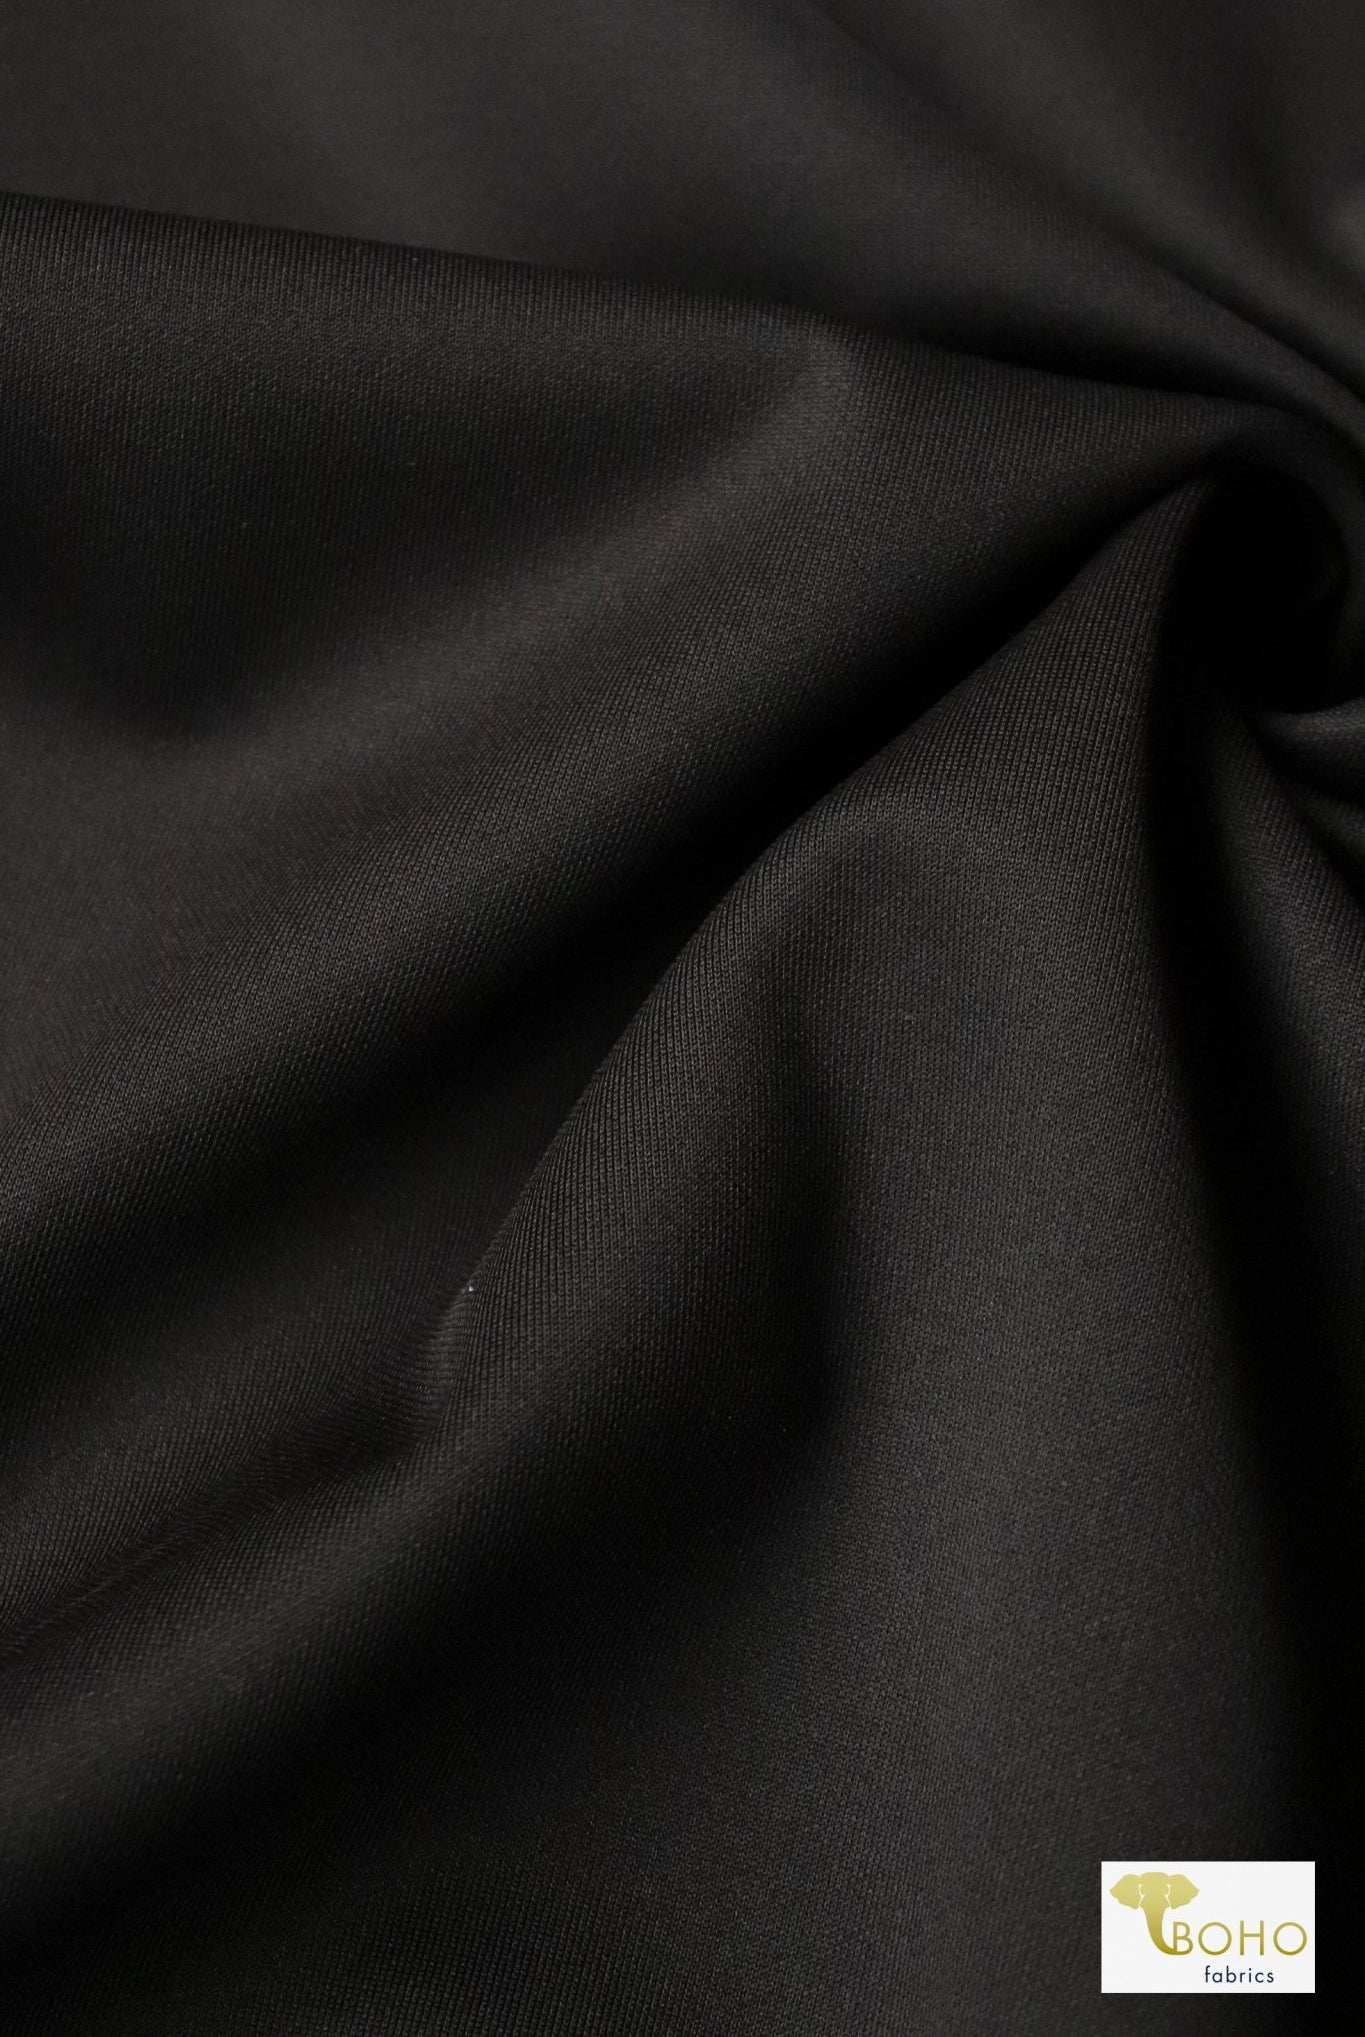 Black, Scuba Knit - Boho Fabrics